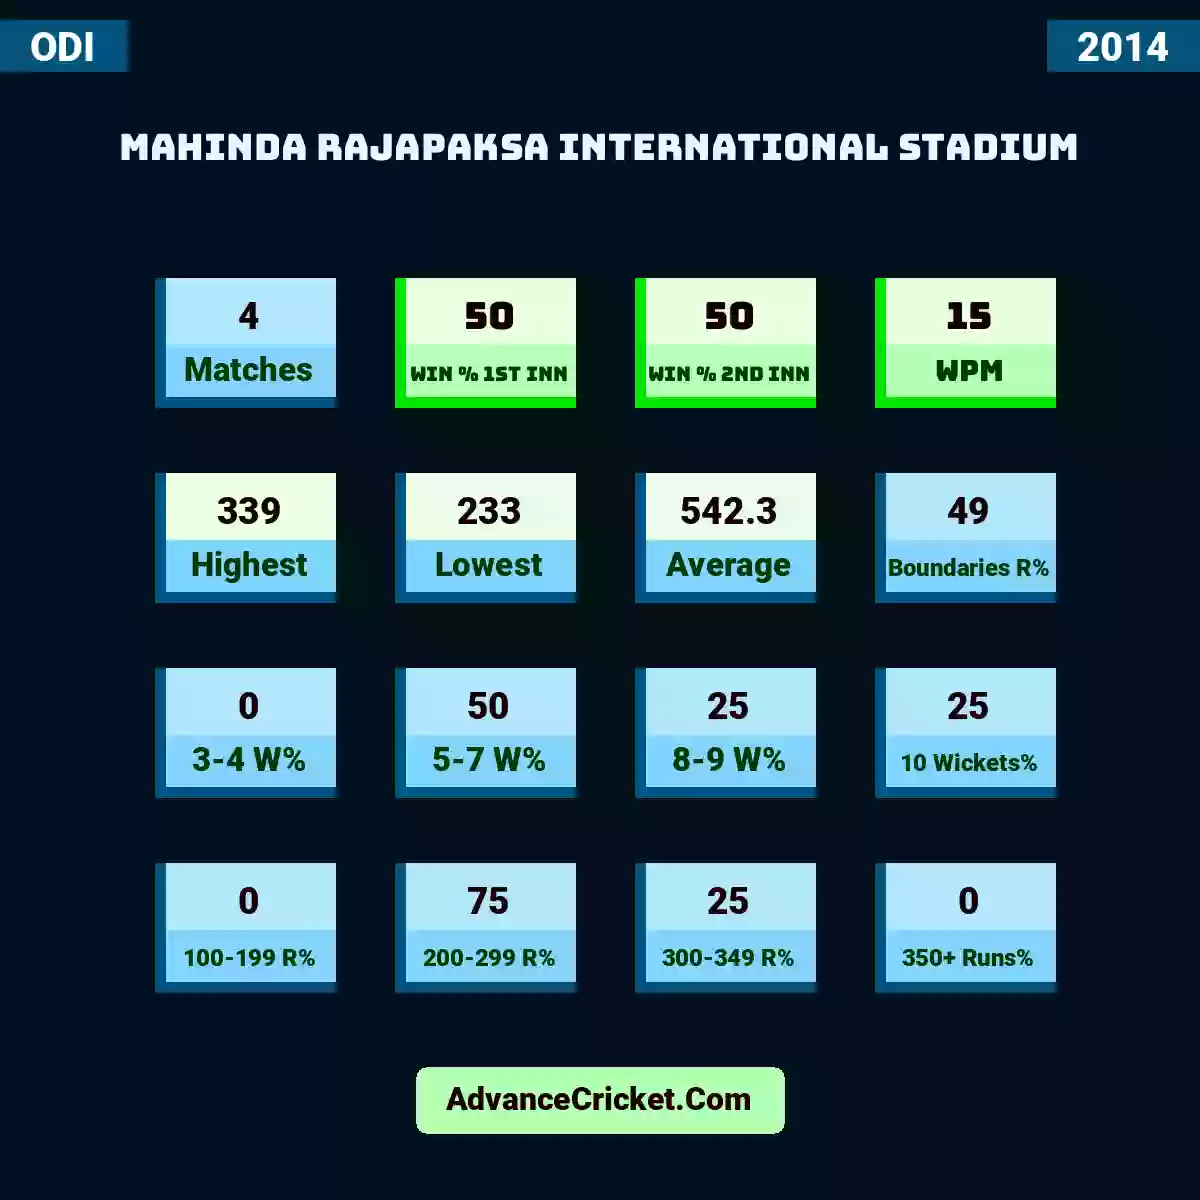 Image showing Mahinda Rajapaksa International Stadium with Matches: 4, Win % 1st Inn: 50, Win % 2nd Inn: 50, WPM: 15, Highest: 339, Lowest: 233, Average: 542.3, Boundaries R%: 49, 3-4 W%: 0, 5-7 W%: 50, 8-9 W%: 25, 10 Wickets%: 25, 100-199 R%: 0, 200-299 R%: 75, 300-349 R%: 25, 350+ Runs%: 0.